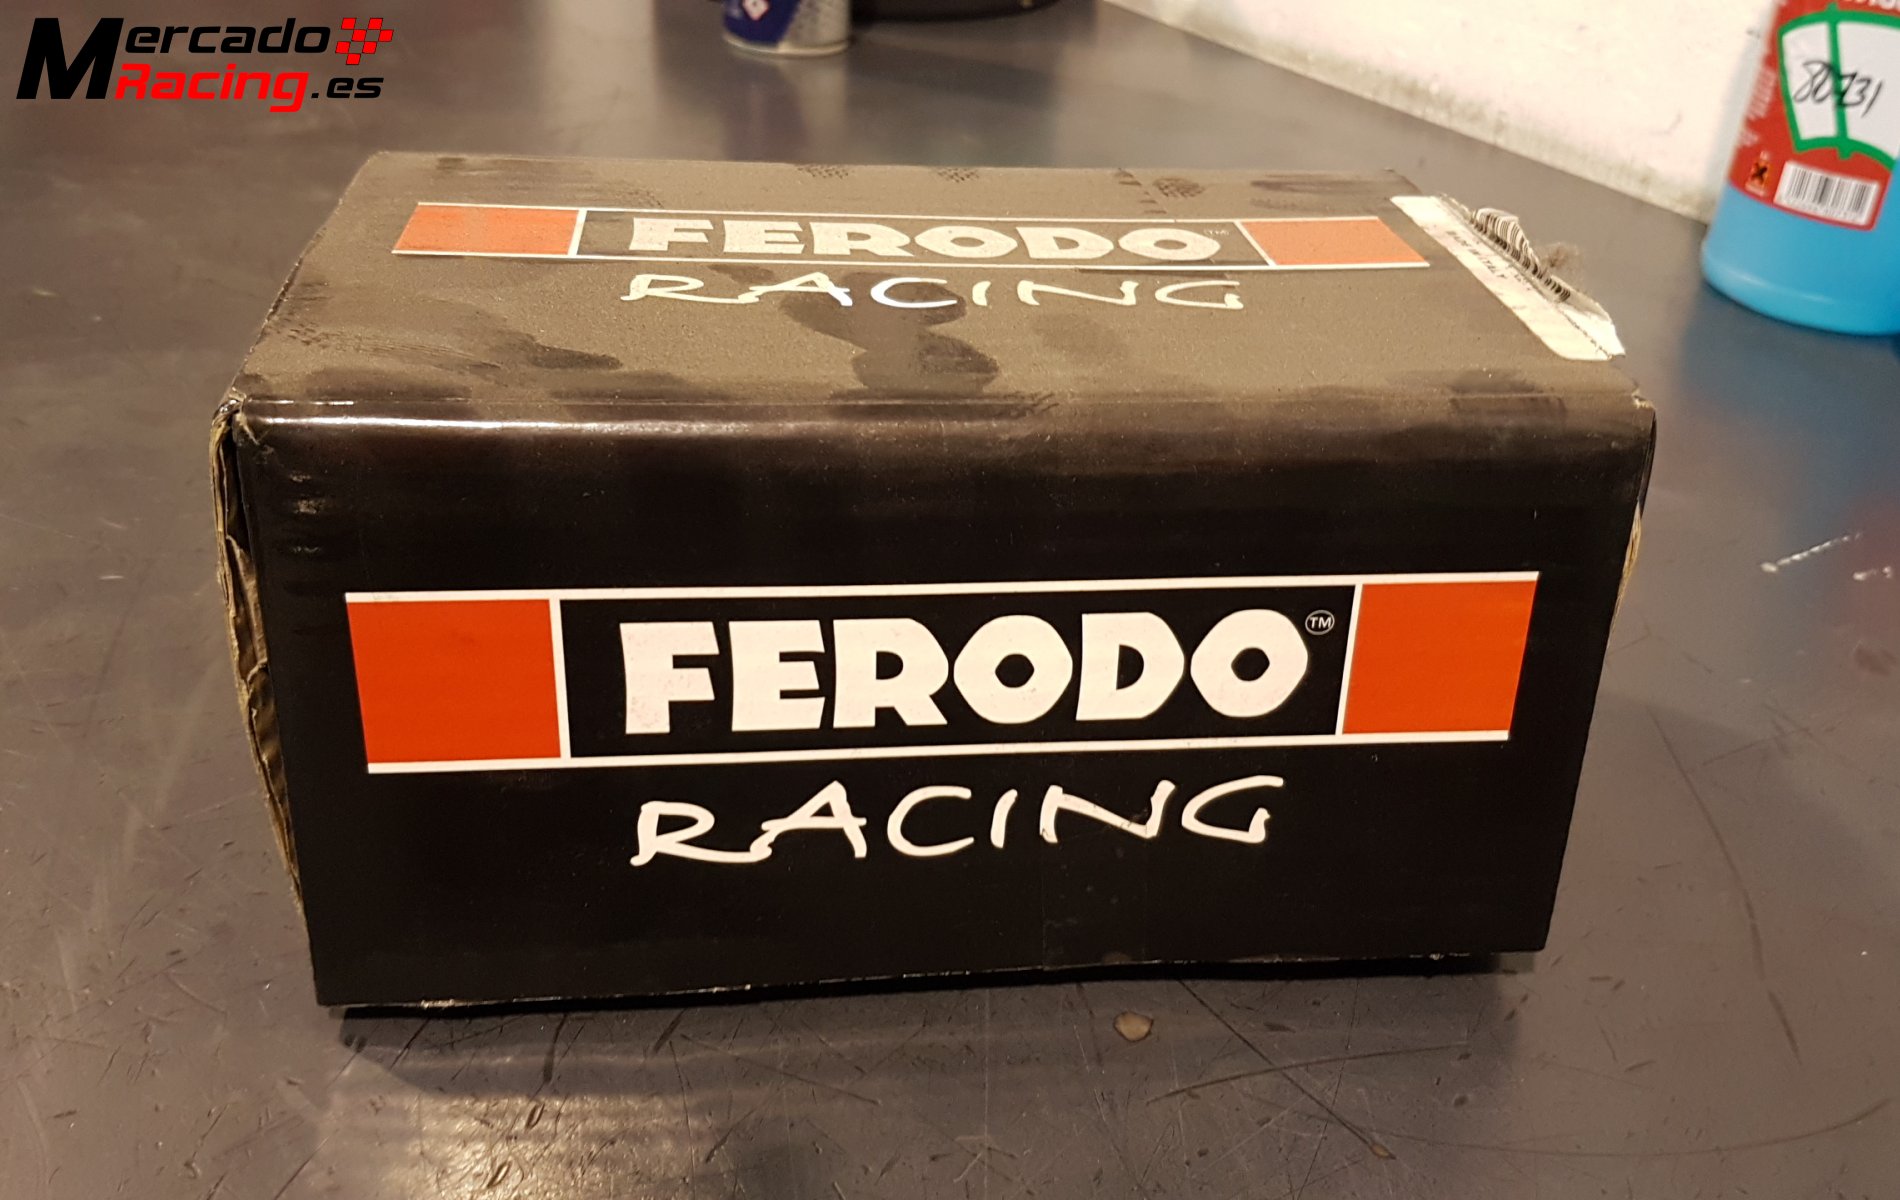 Ferodo racing fcp1641h